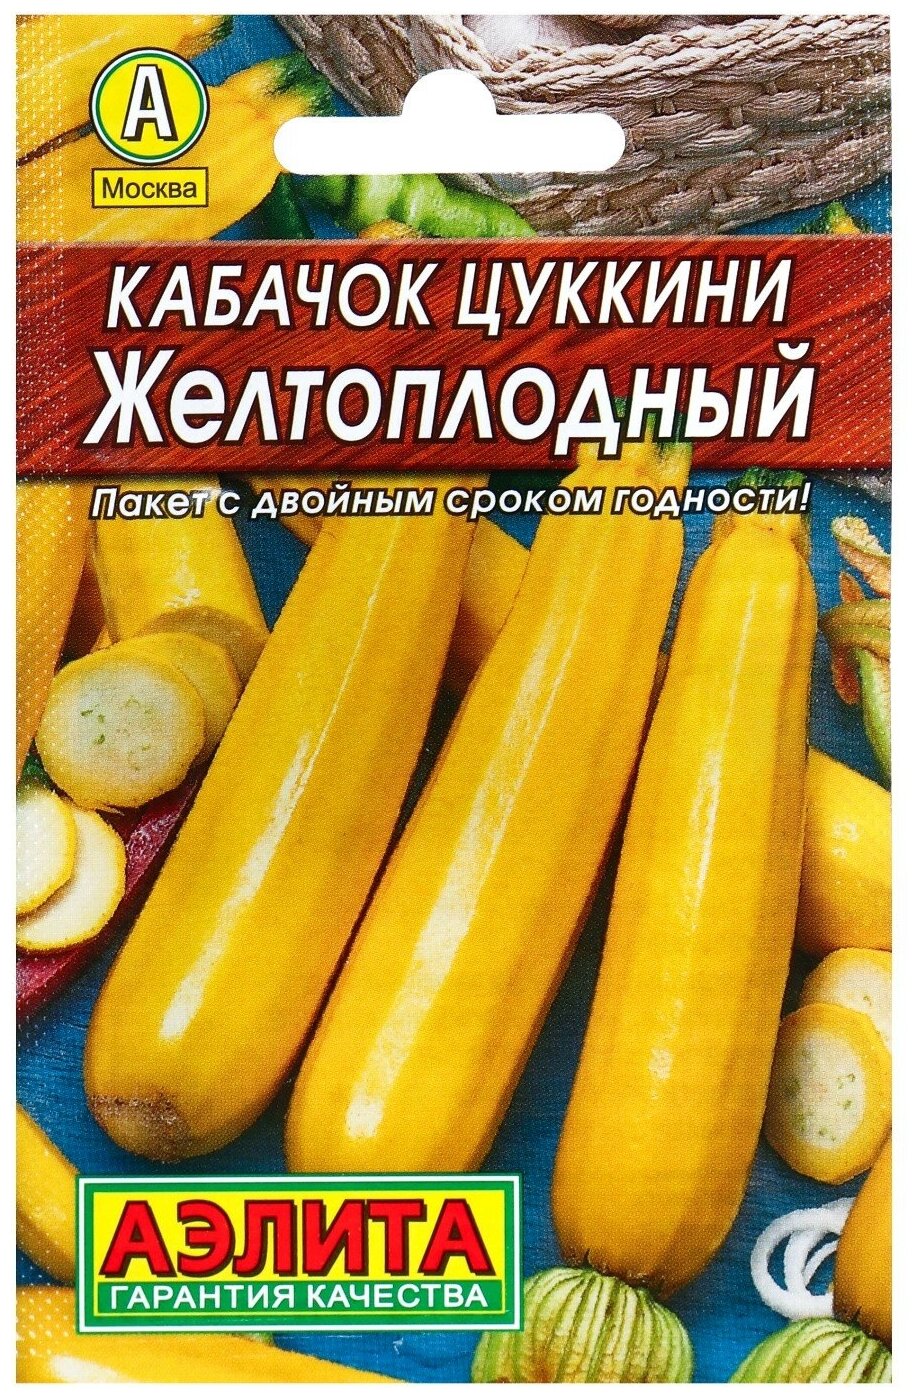 Семена Кабачок цуккини "Желтоплодный" "Лидер" 15 г 